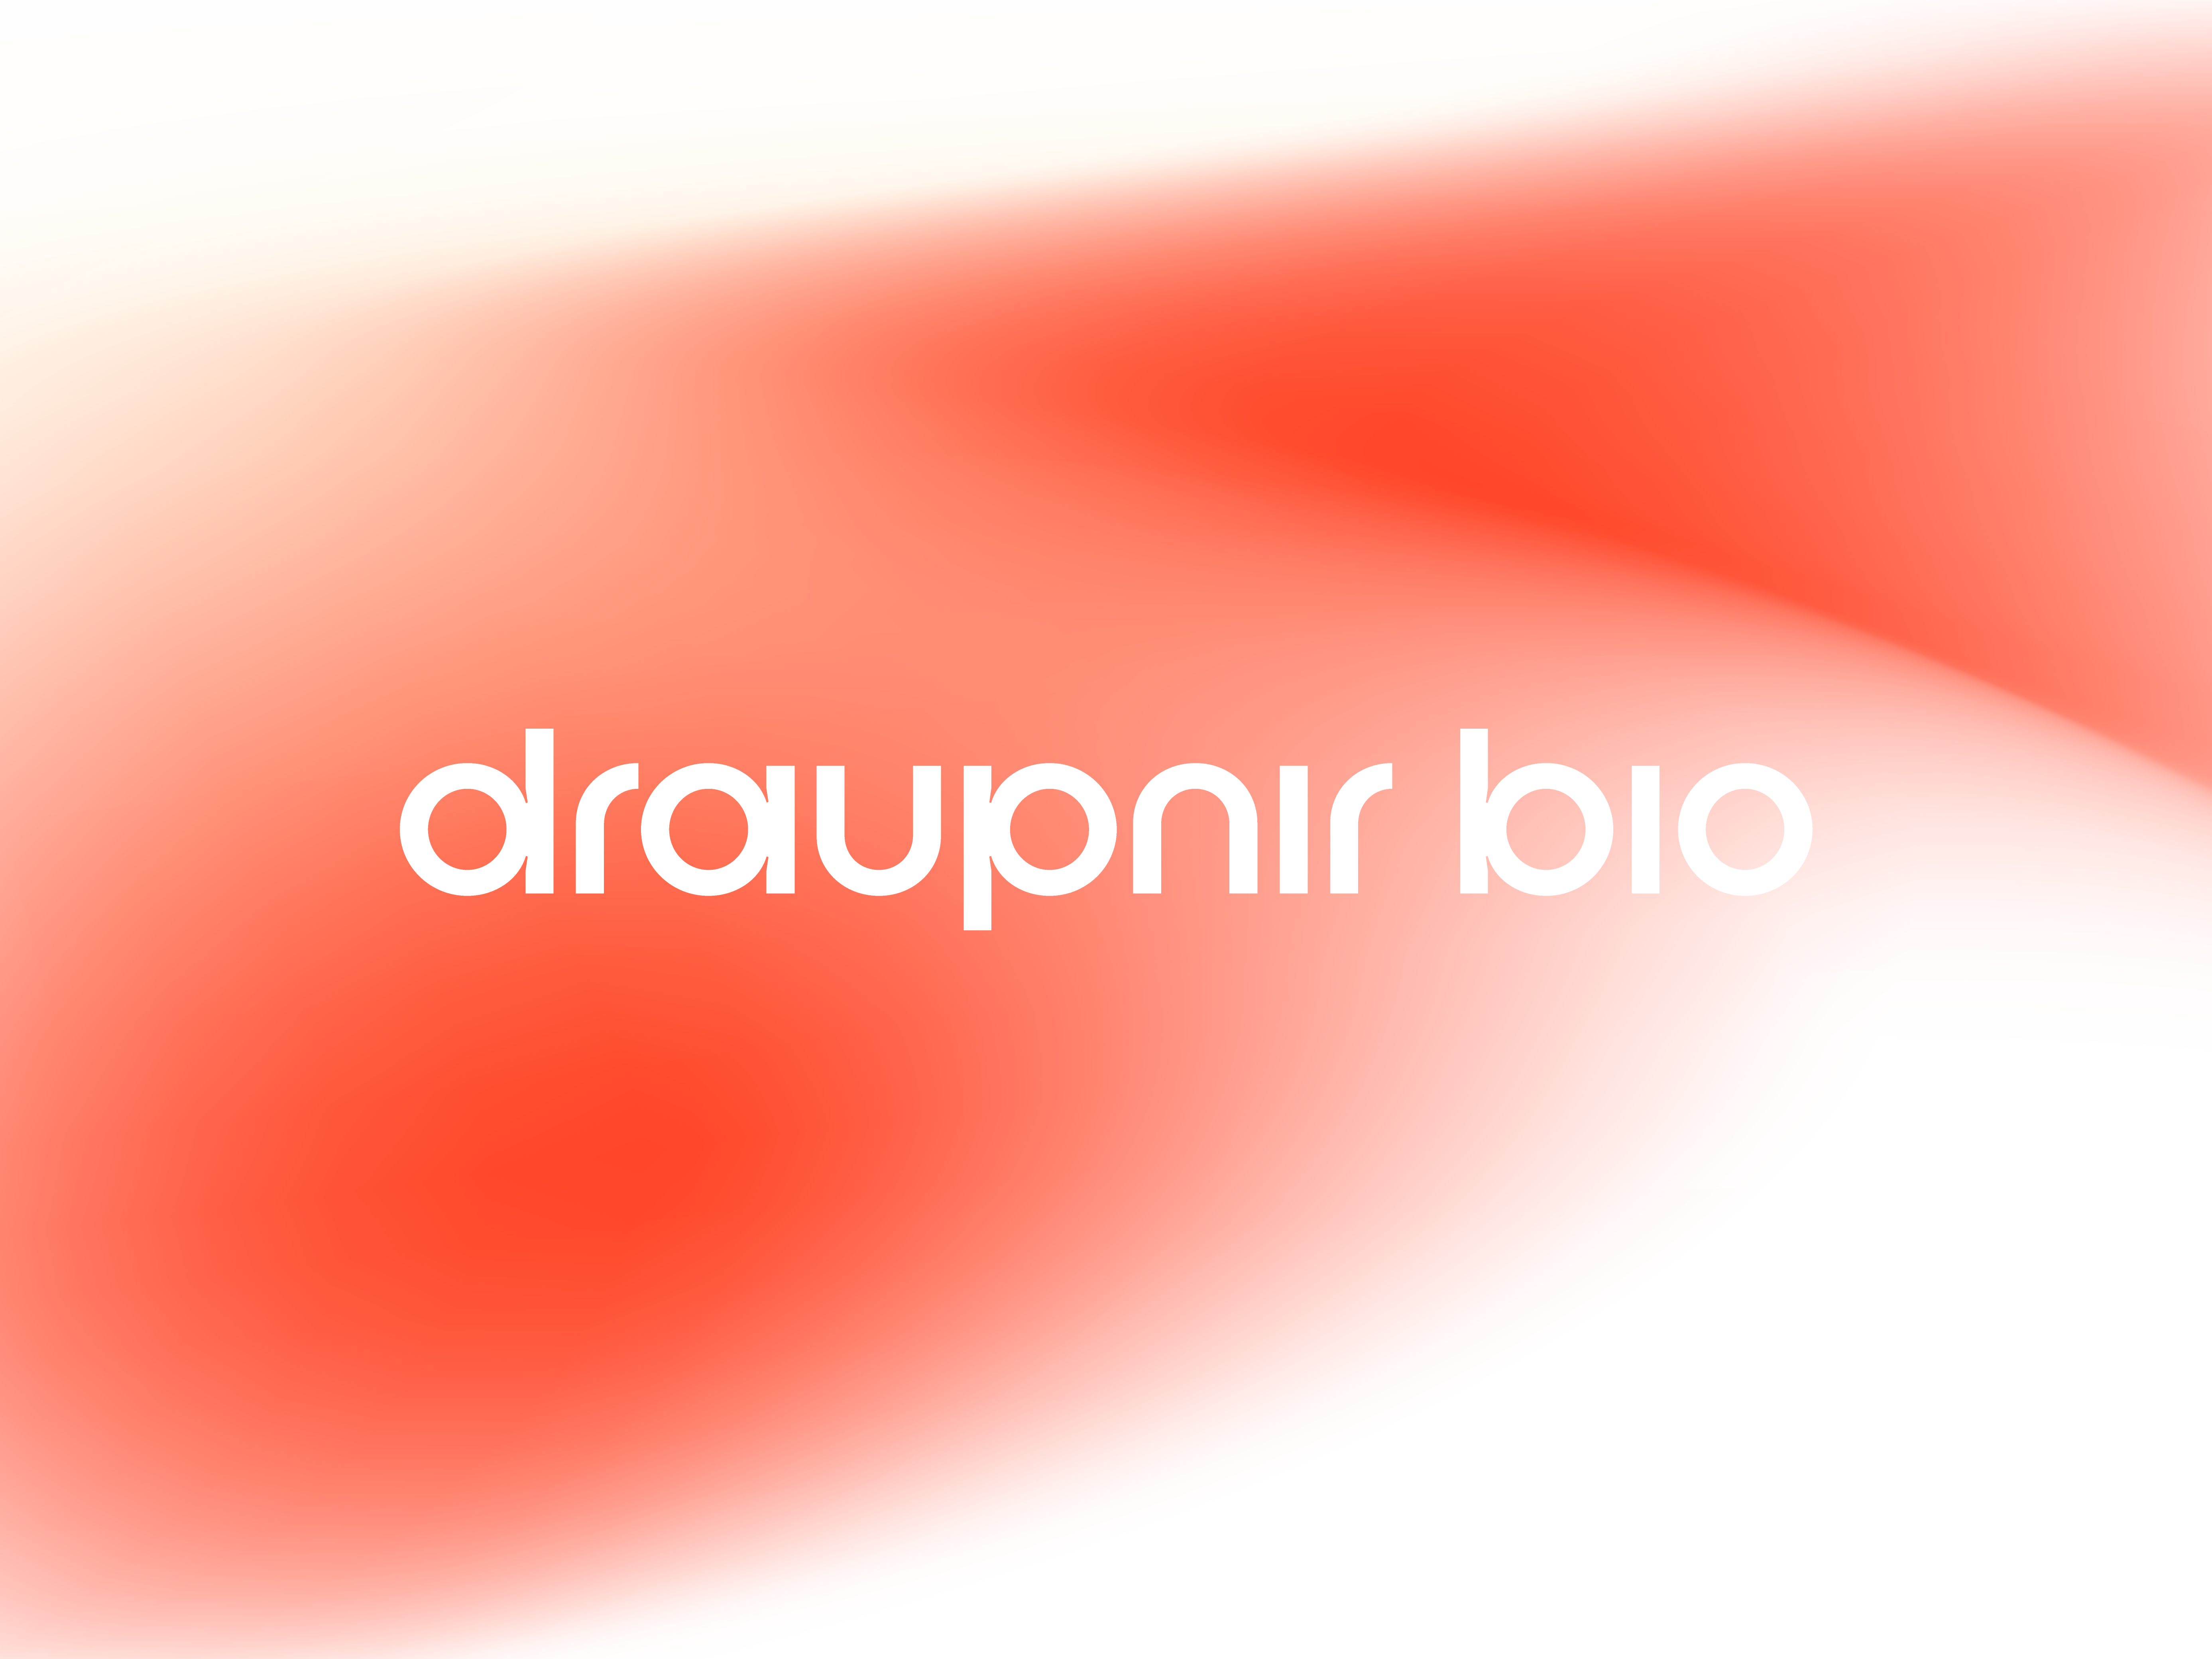 Draupnir Bio establishes Scientific Advisory Board.